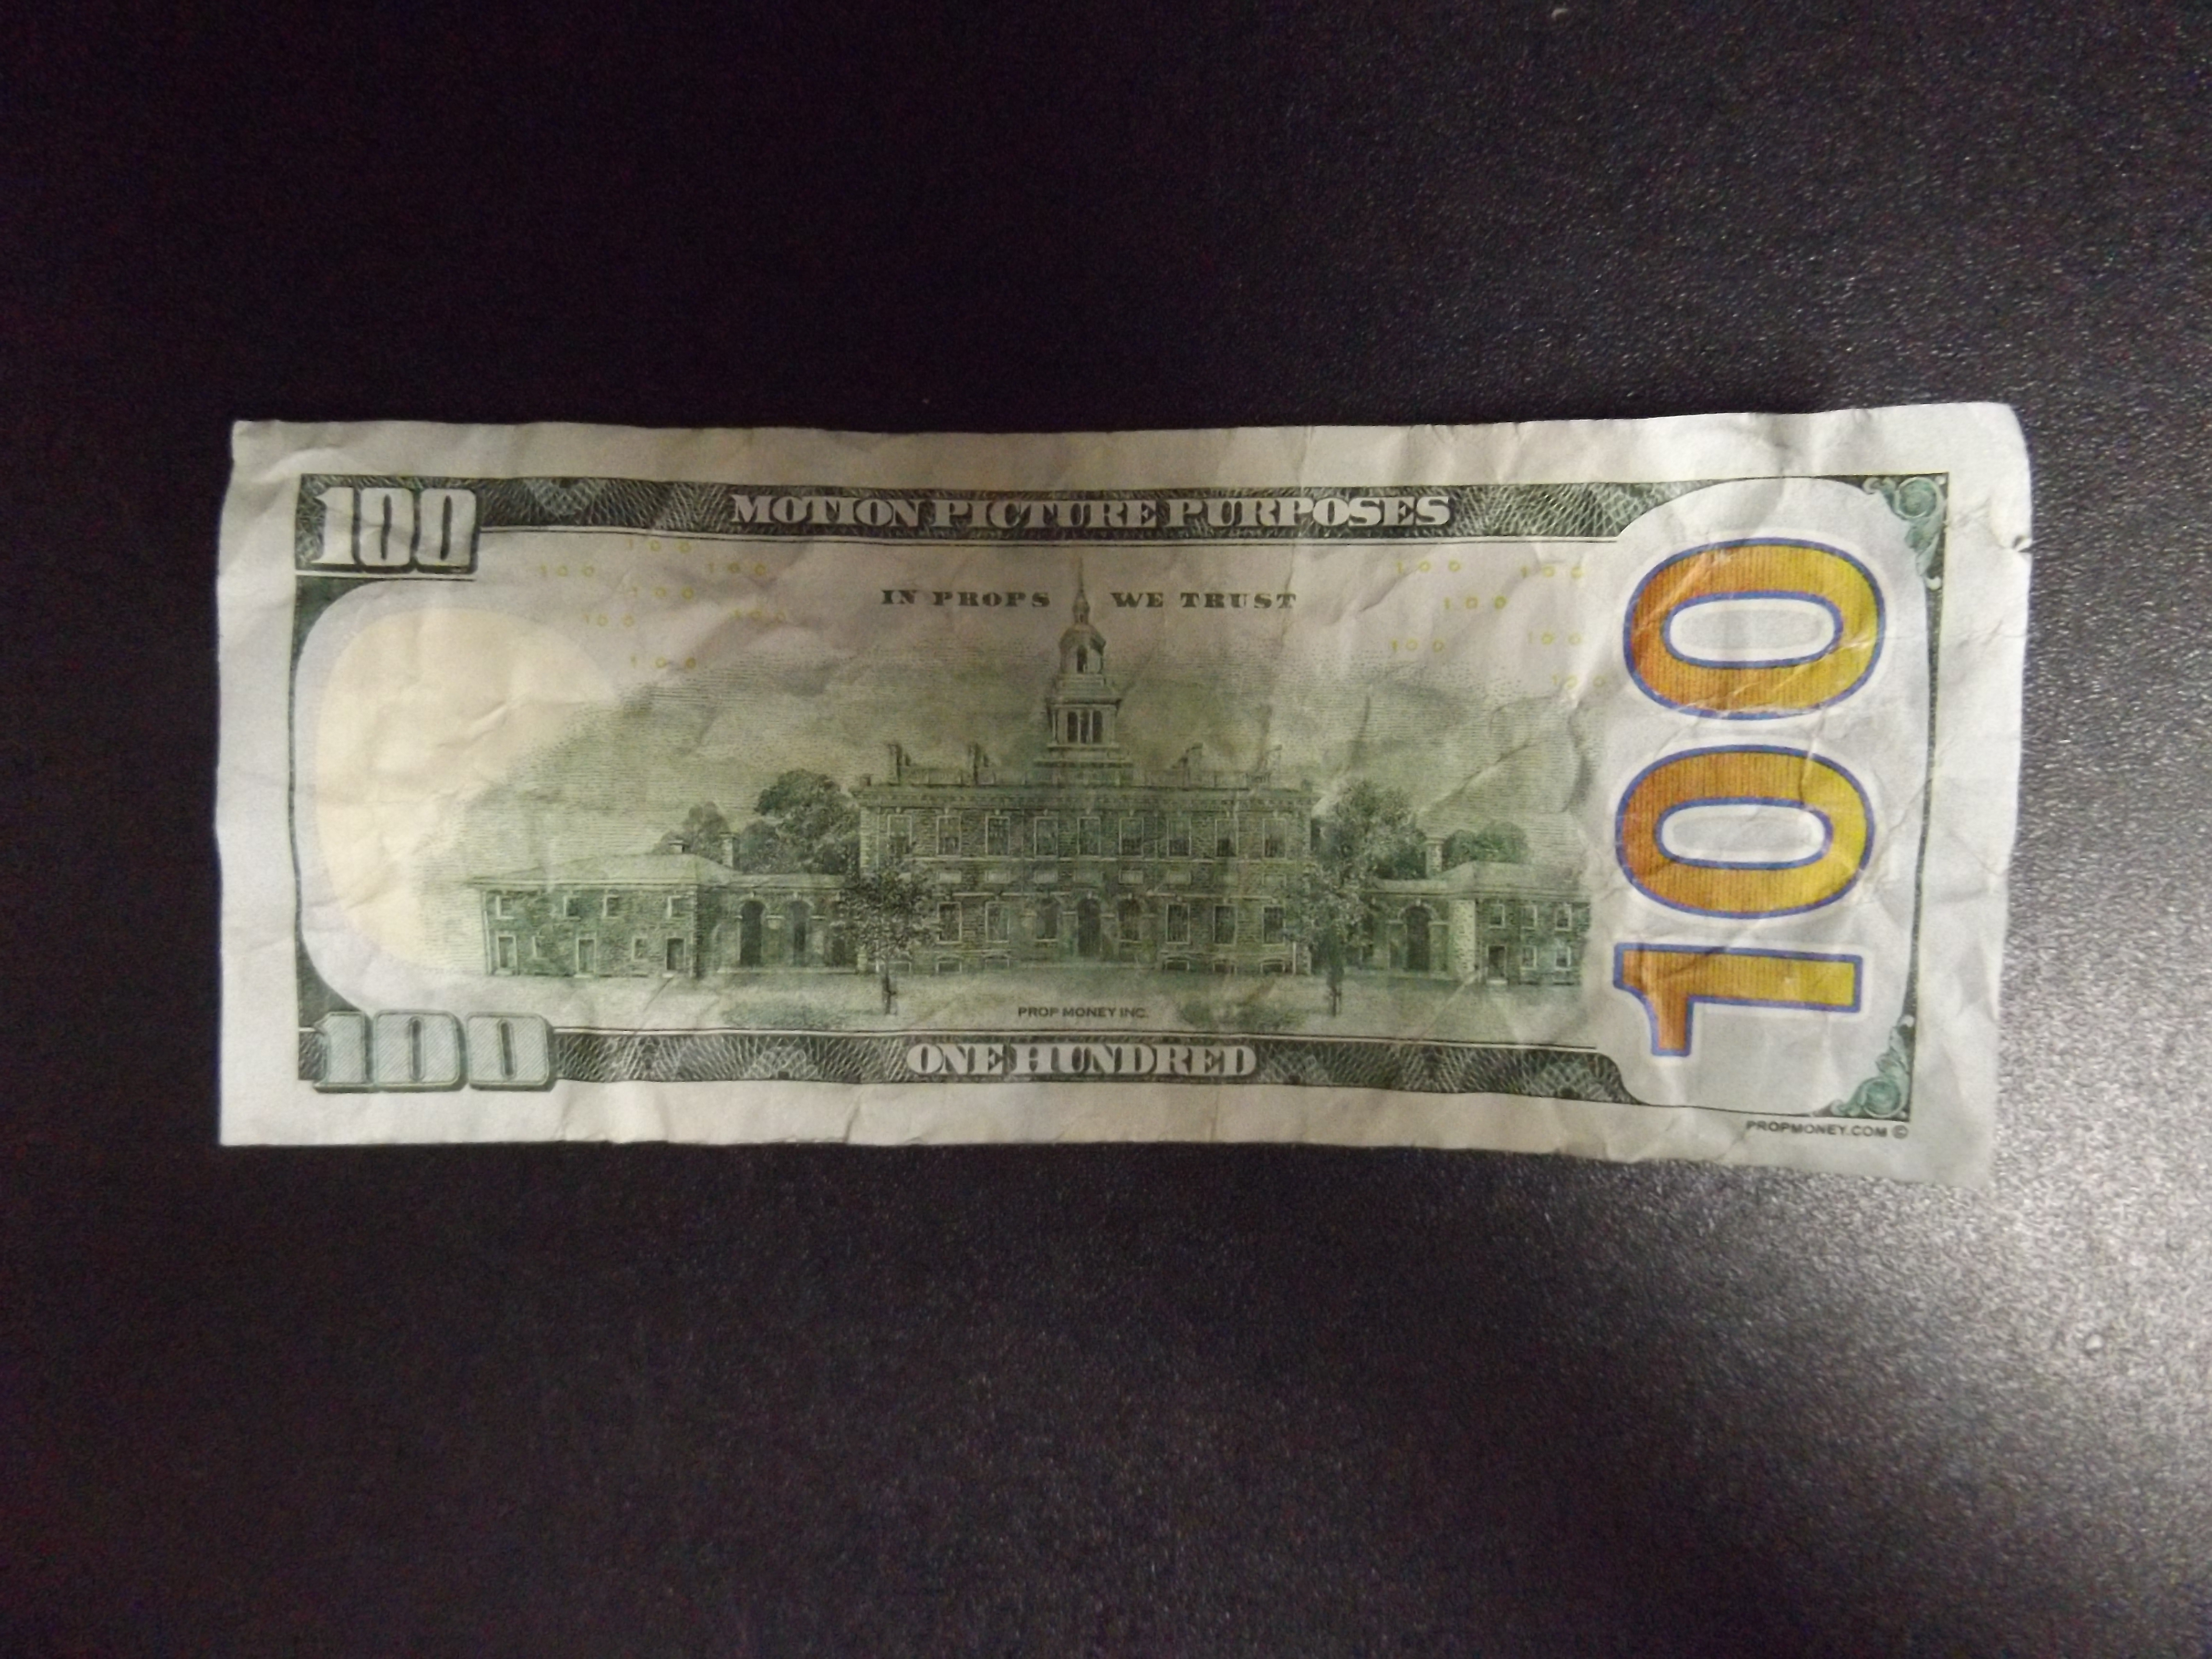 Movie money' counterfeit bill passed in Maryville